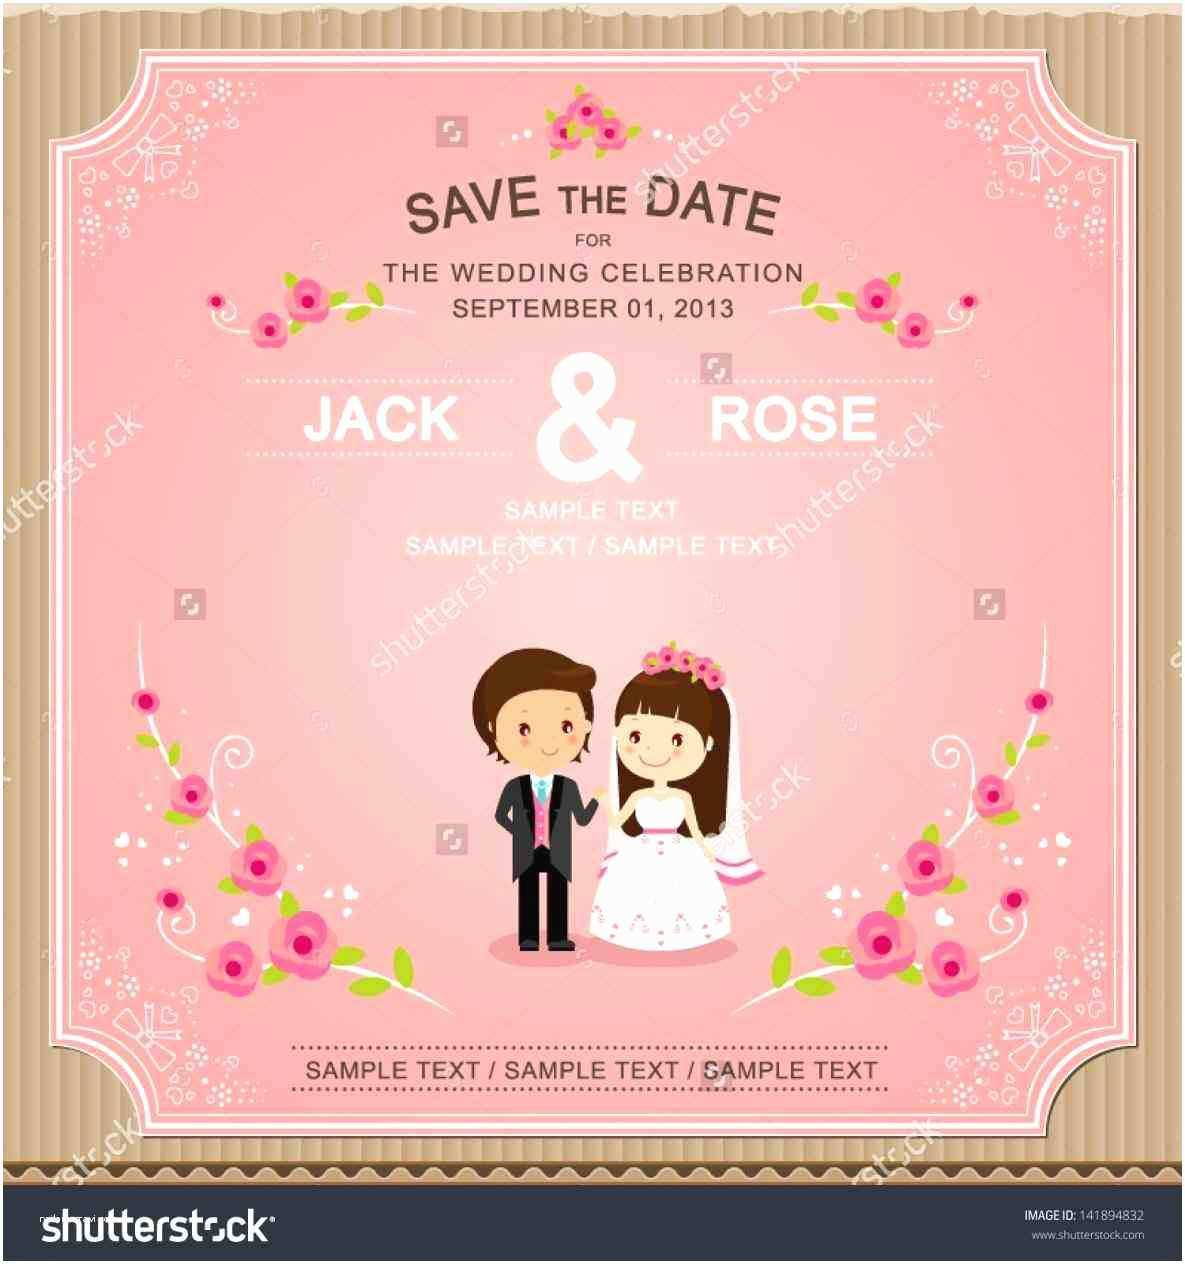 Online Editable Wedding Invitation Cards Free Download Regarding Free E Wedding Invitation Card Templates